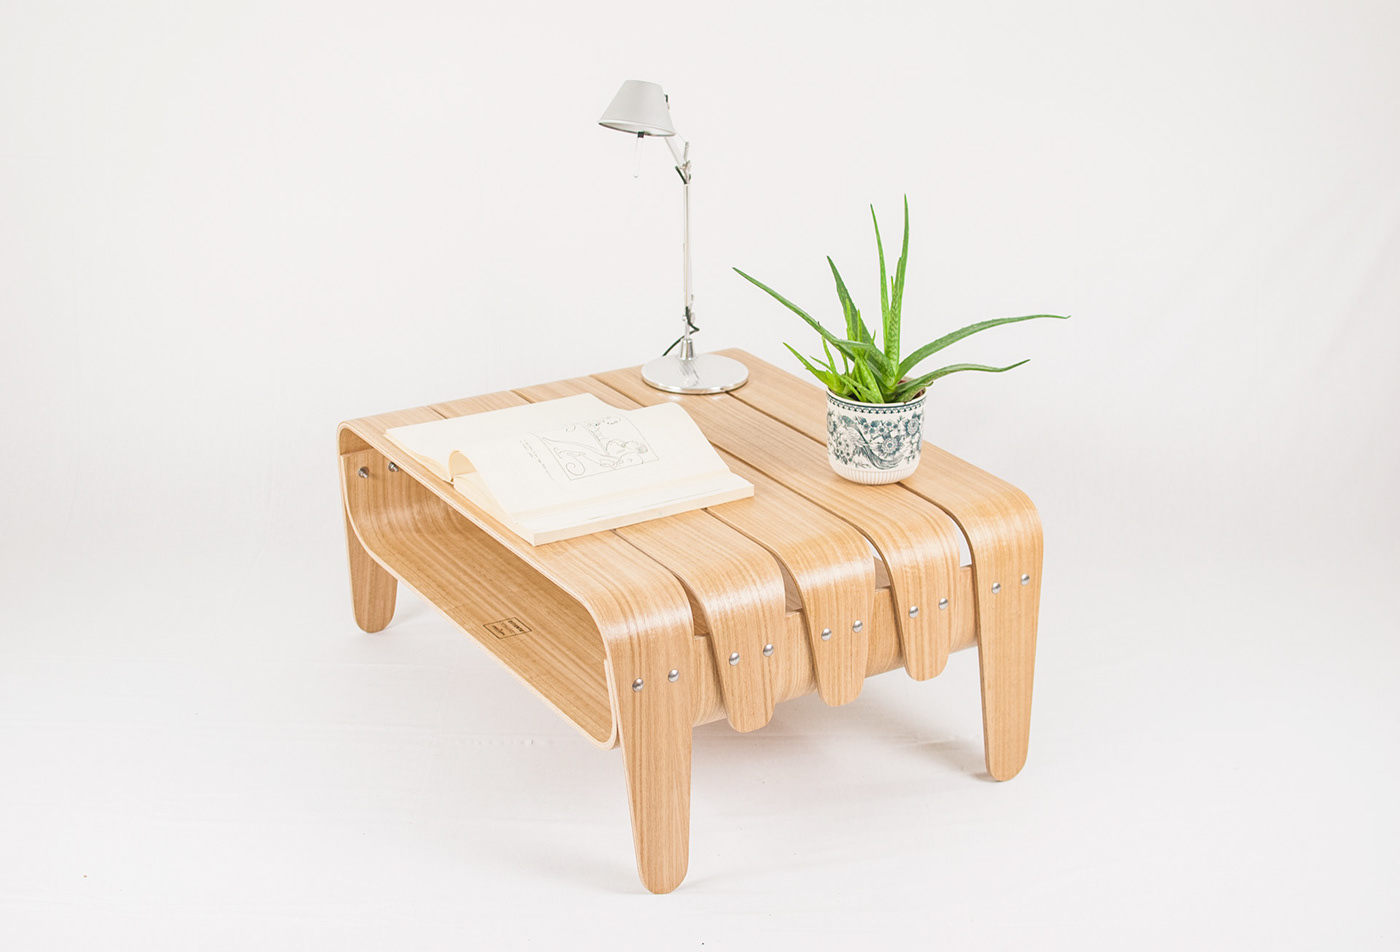 furniture design  chair design Bench Design coffee table product design  furniture woodworking handmade craftsmanship